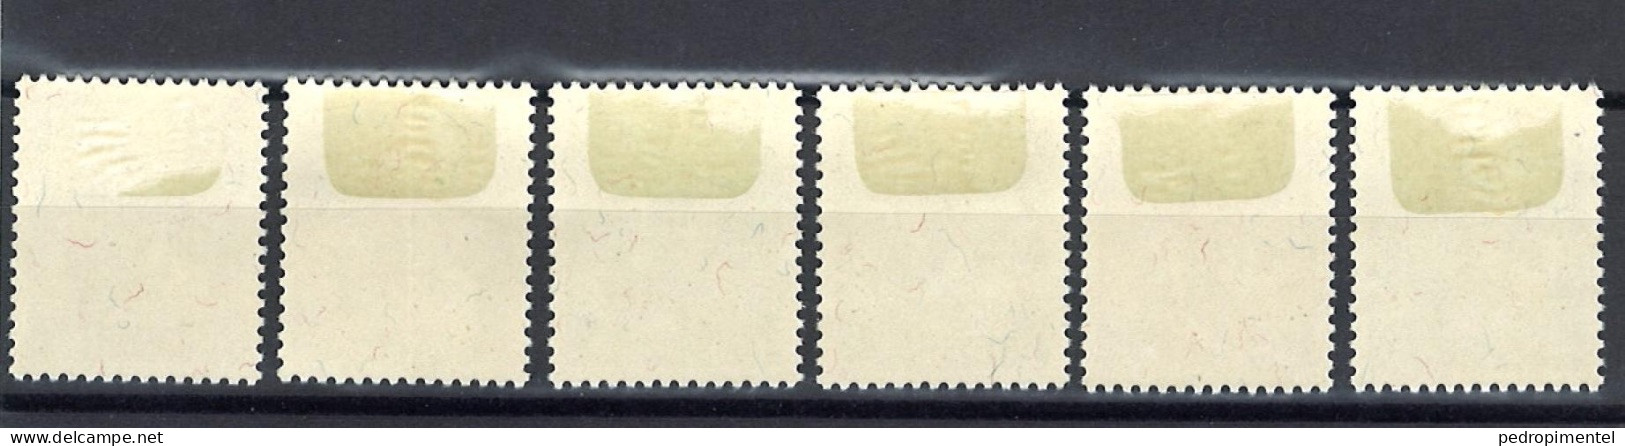 Portugal Stamps 1945 "President Carmona" Condition MH #652-657 - Ongebruikt